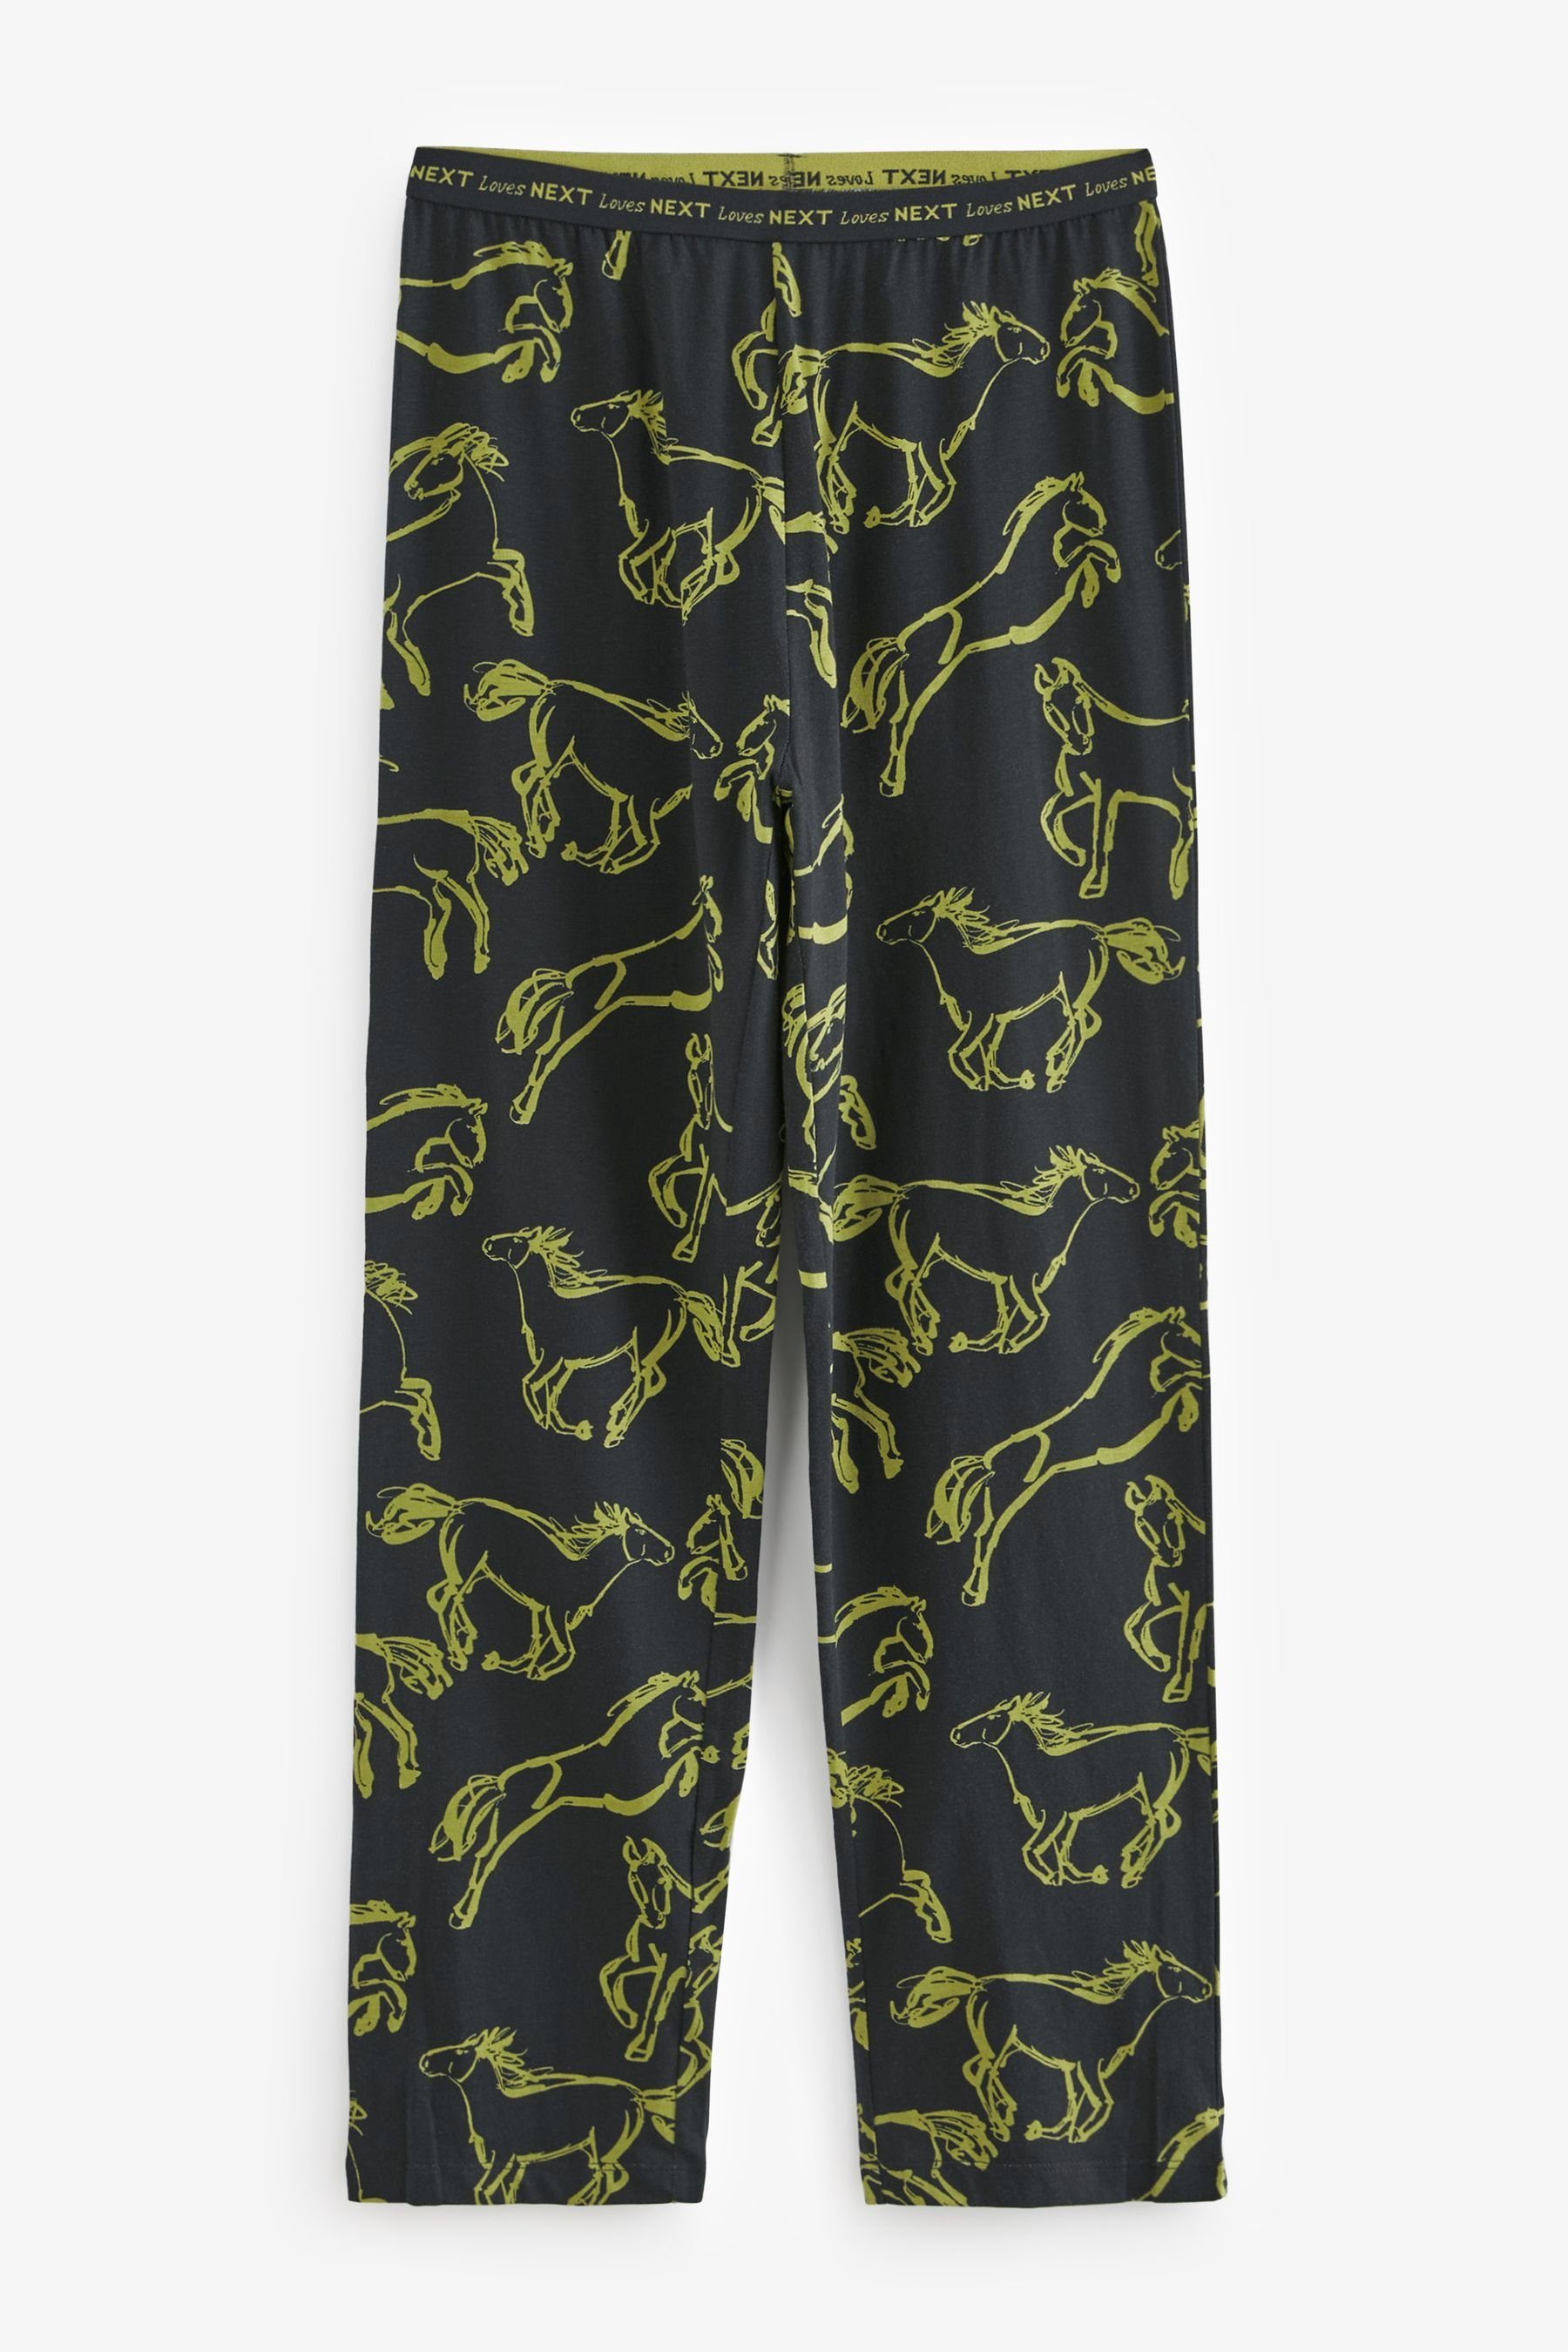 tlg) (2 Grey Charcoal Horse Kurzärmeliger Pyjama Next Baumwoll-Pyjama